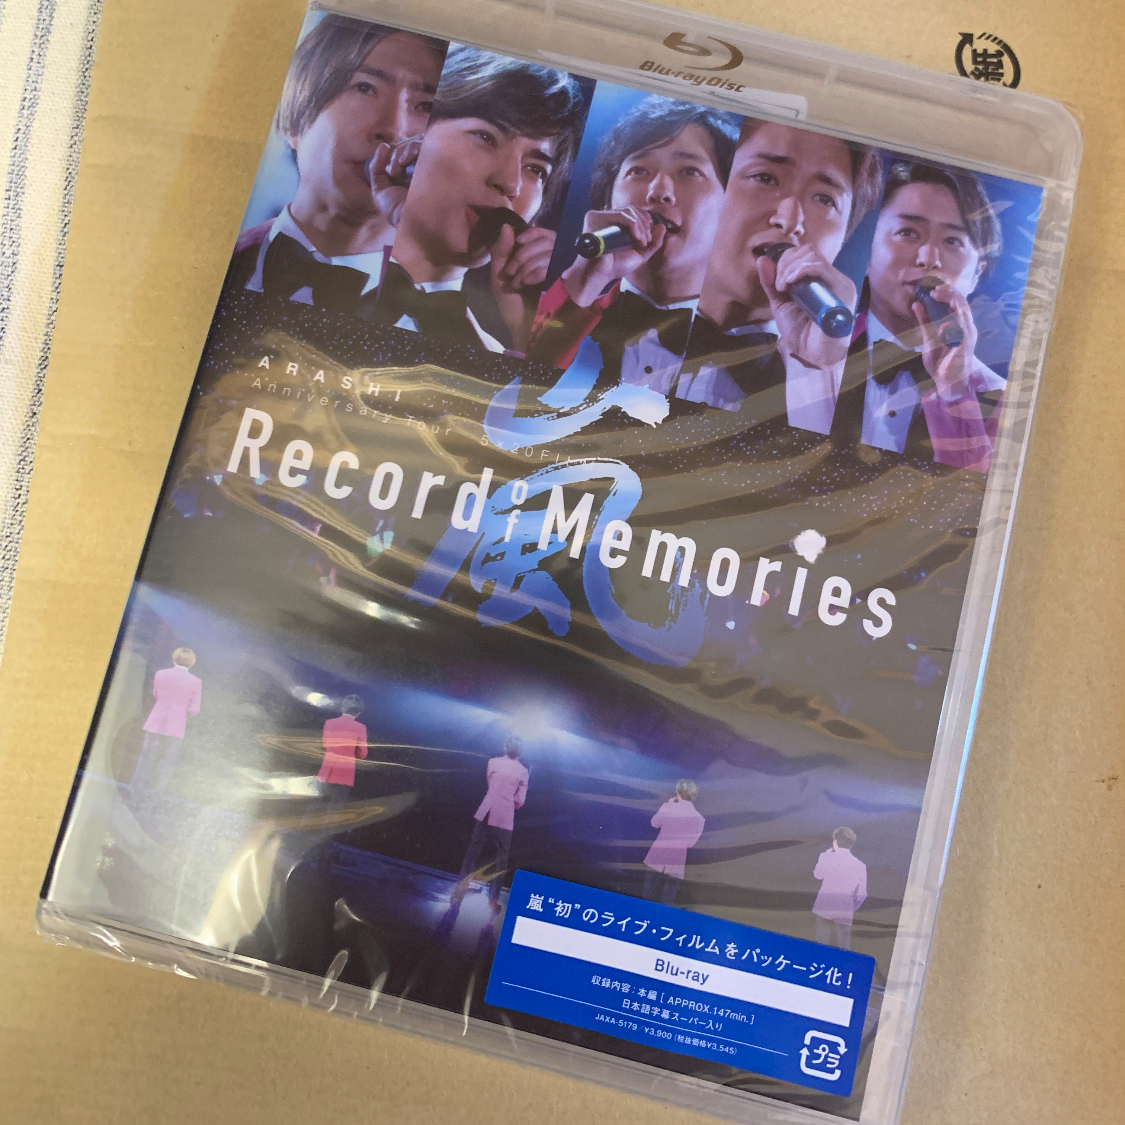 ARASHI “Record of Memories” Blu-ray